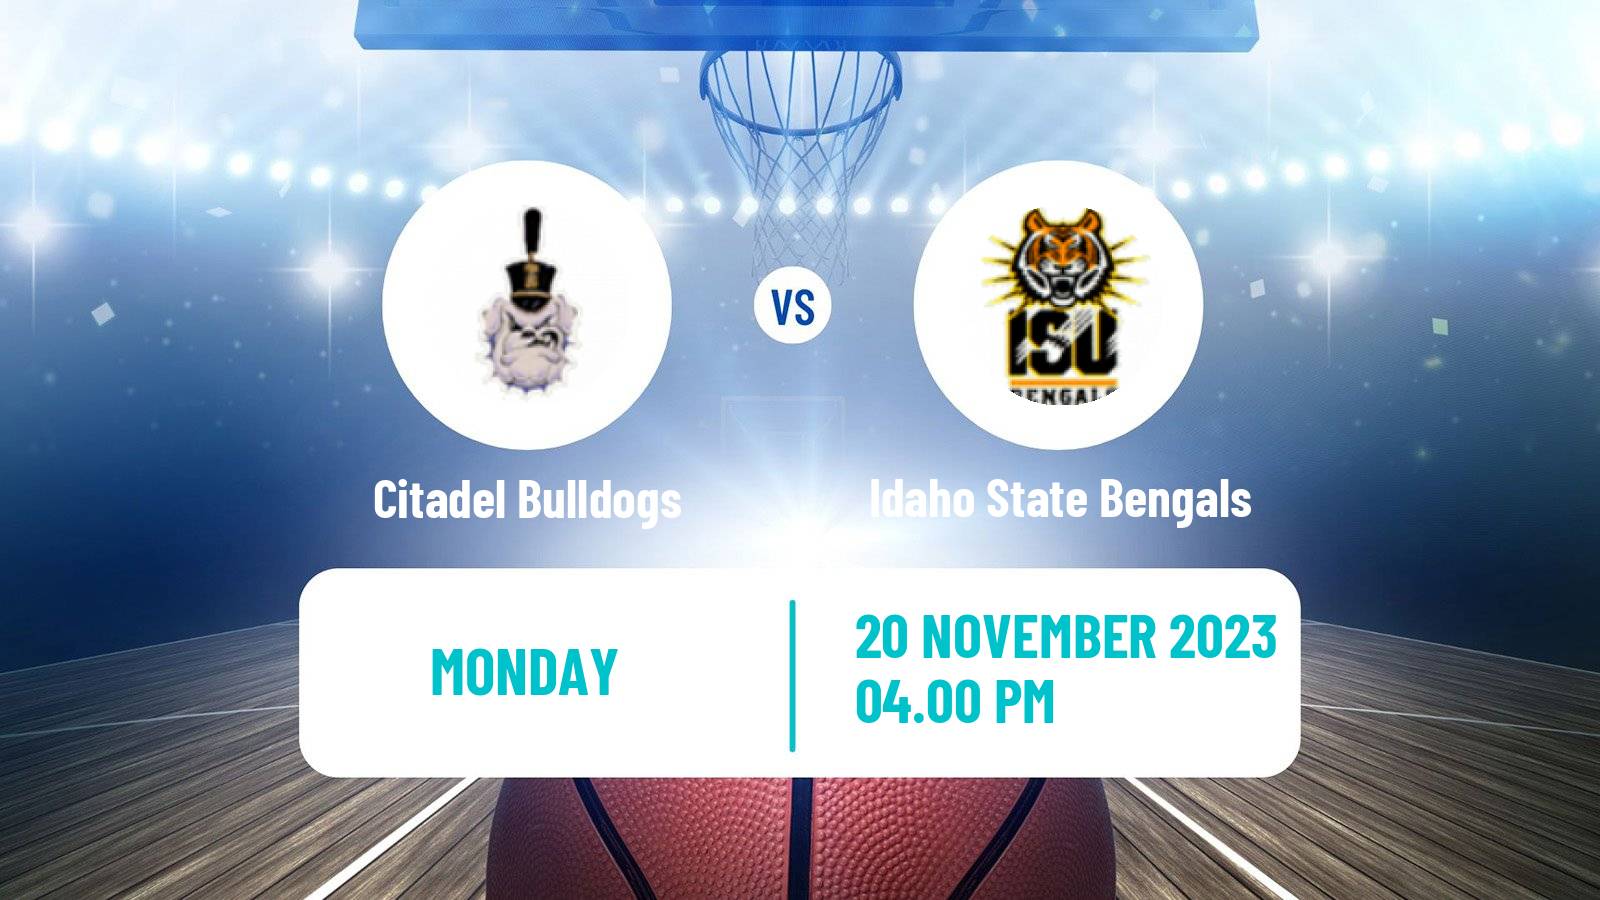 Basketball NCAA College Basketball Citadel Bulldogs - Idaho State Bengals